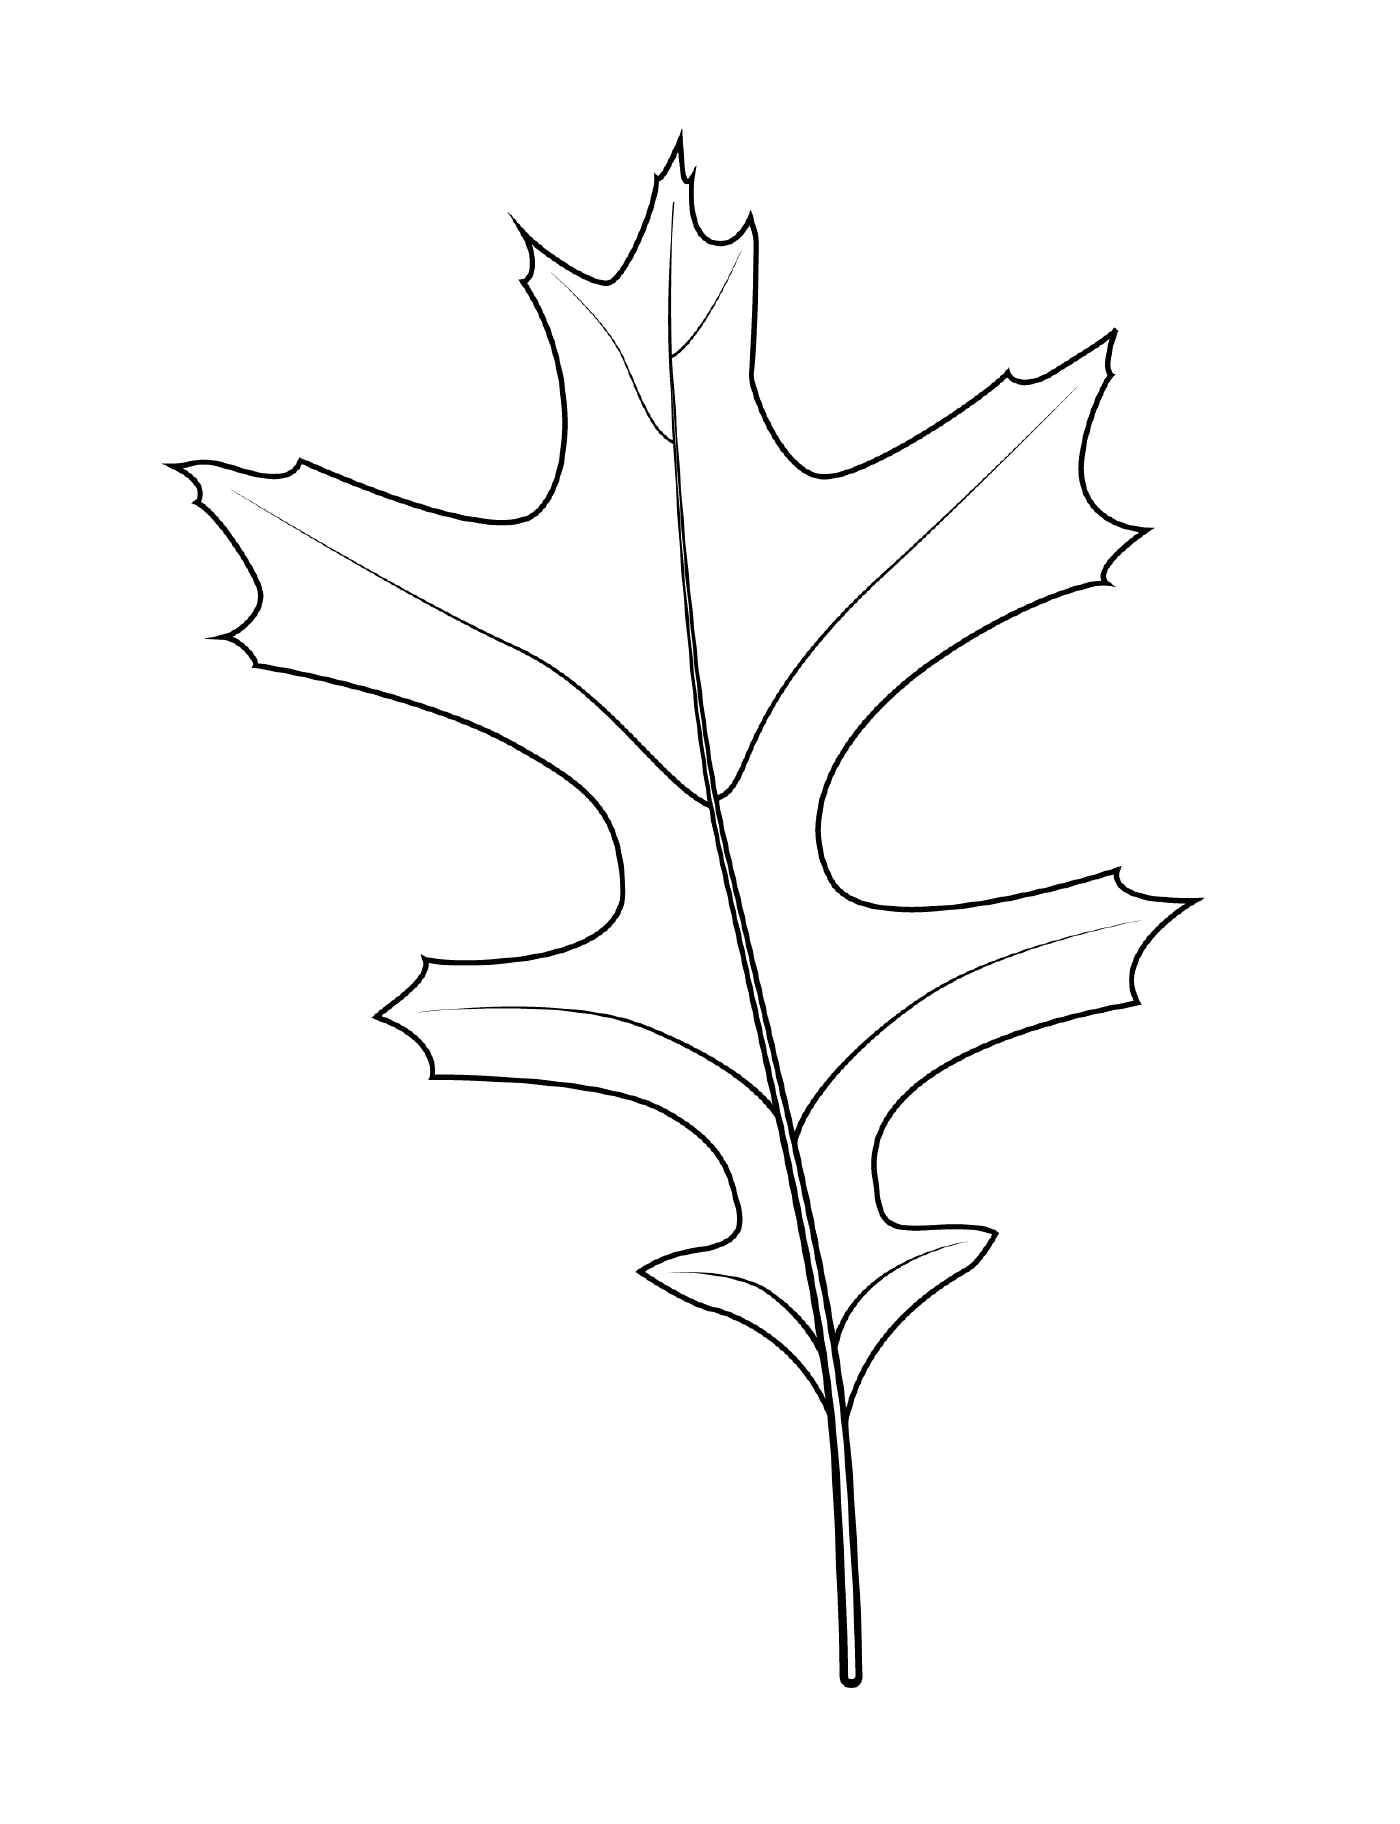  Oak leaf with dots 